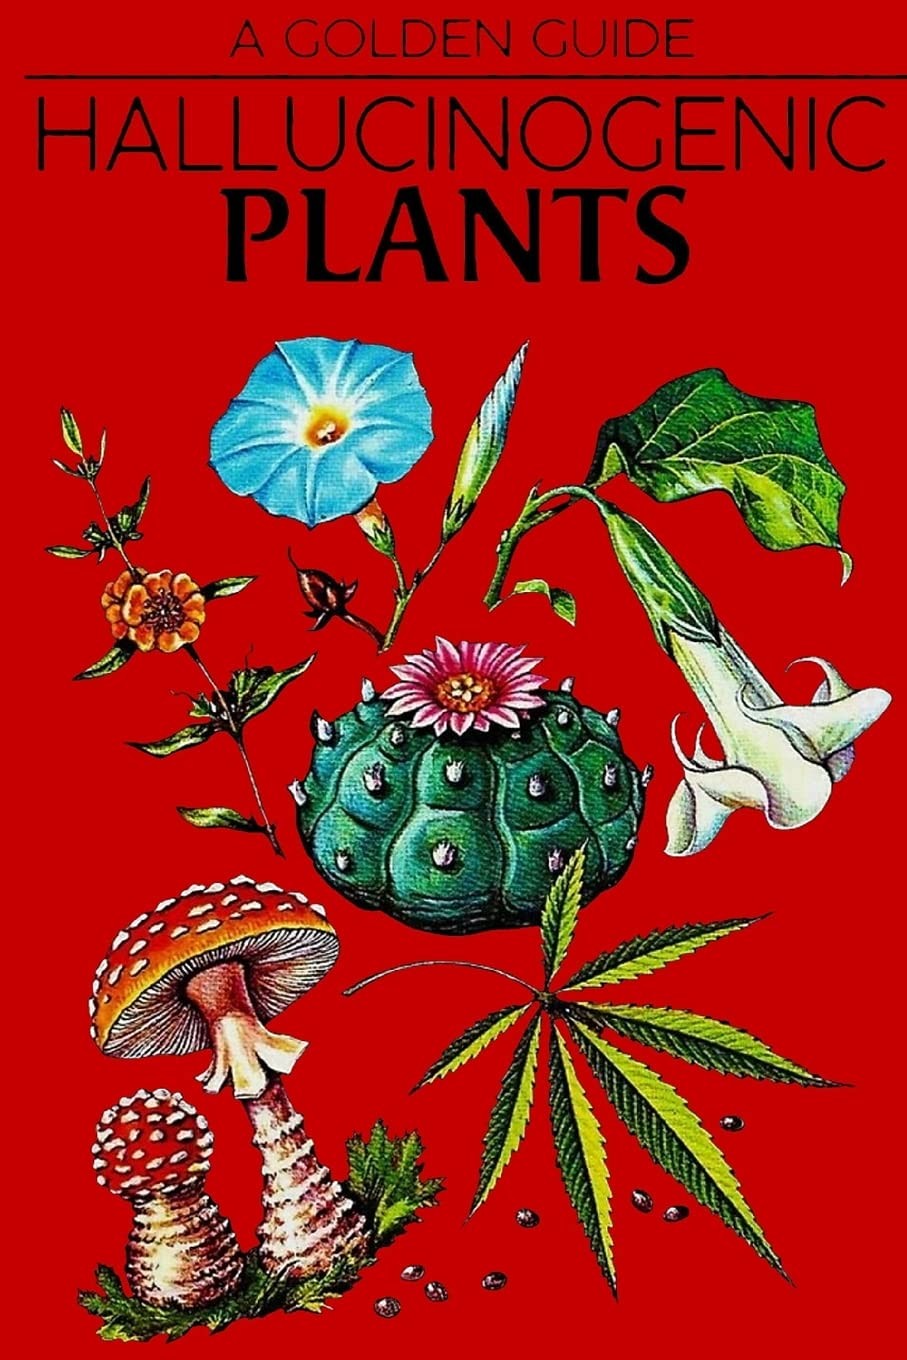 Hallucinogenic Plants: A Golden Guide